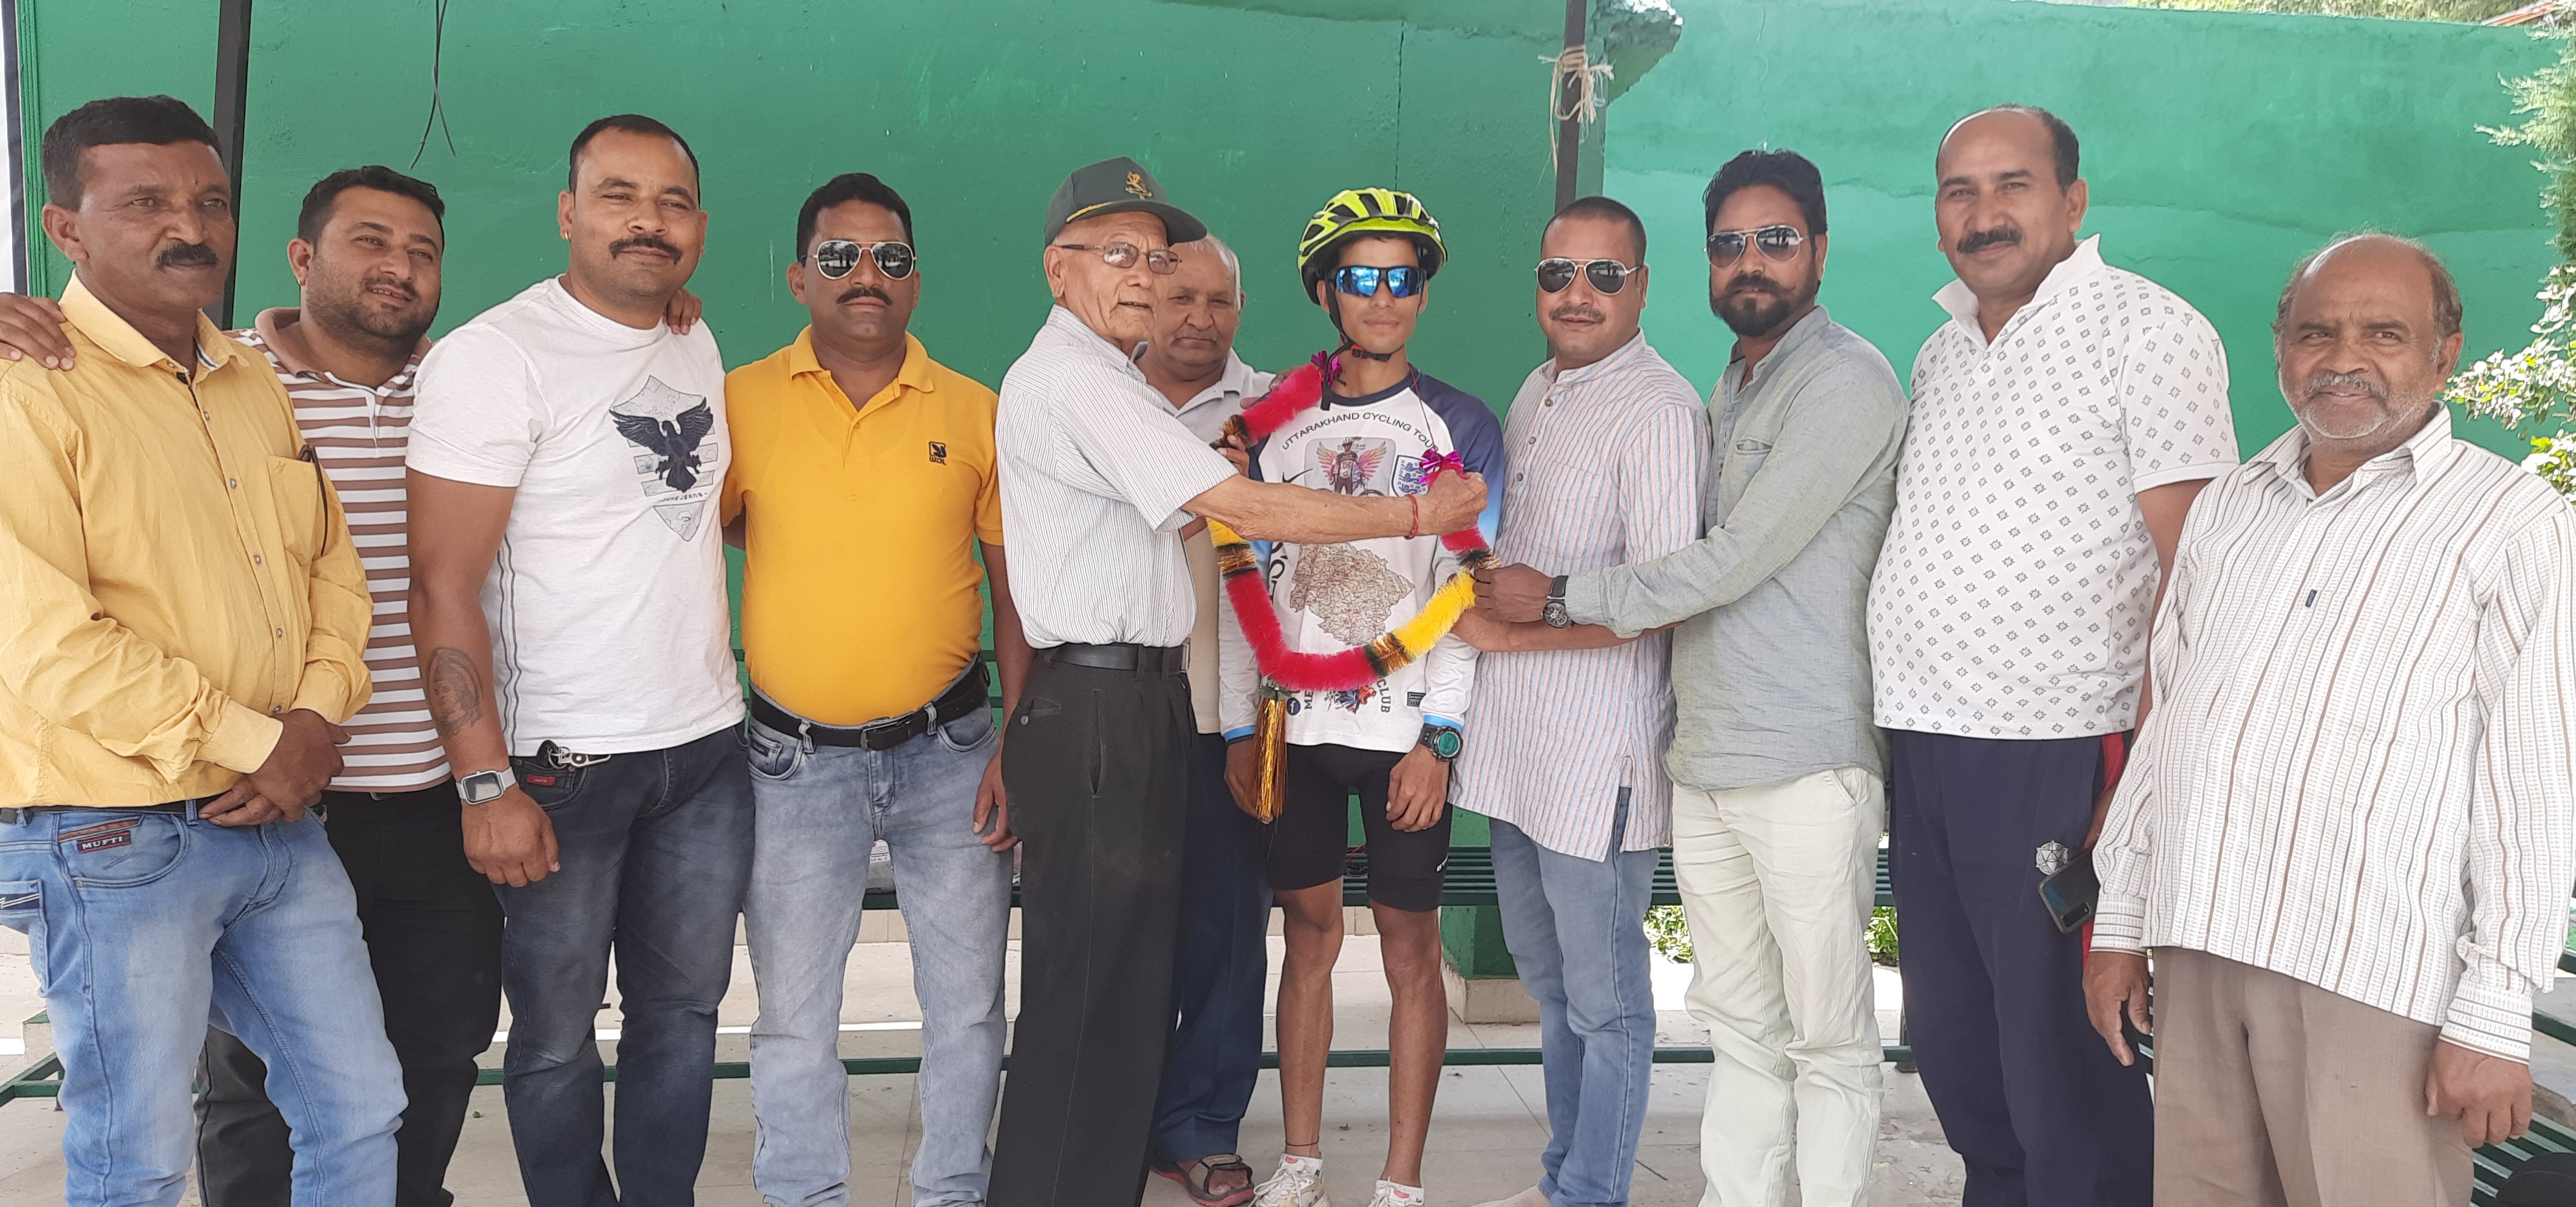 Ravi Mehta reached Berinag by cycle